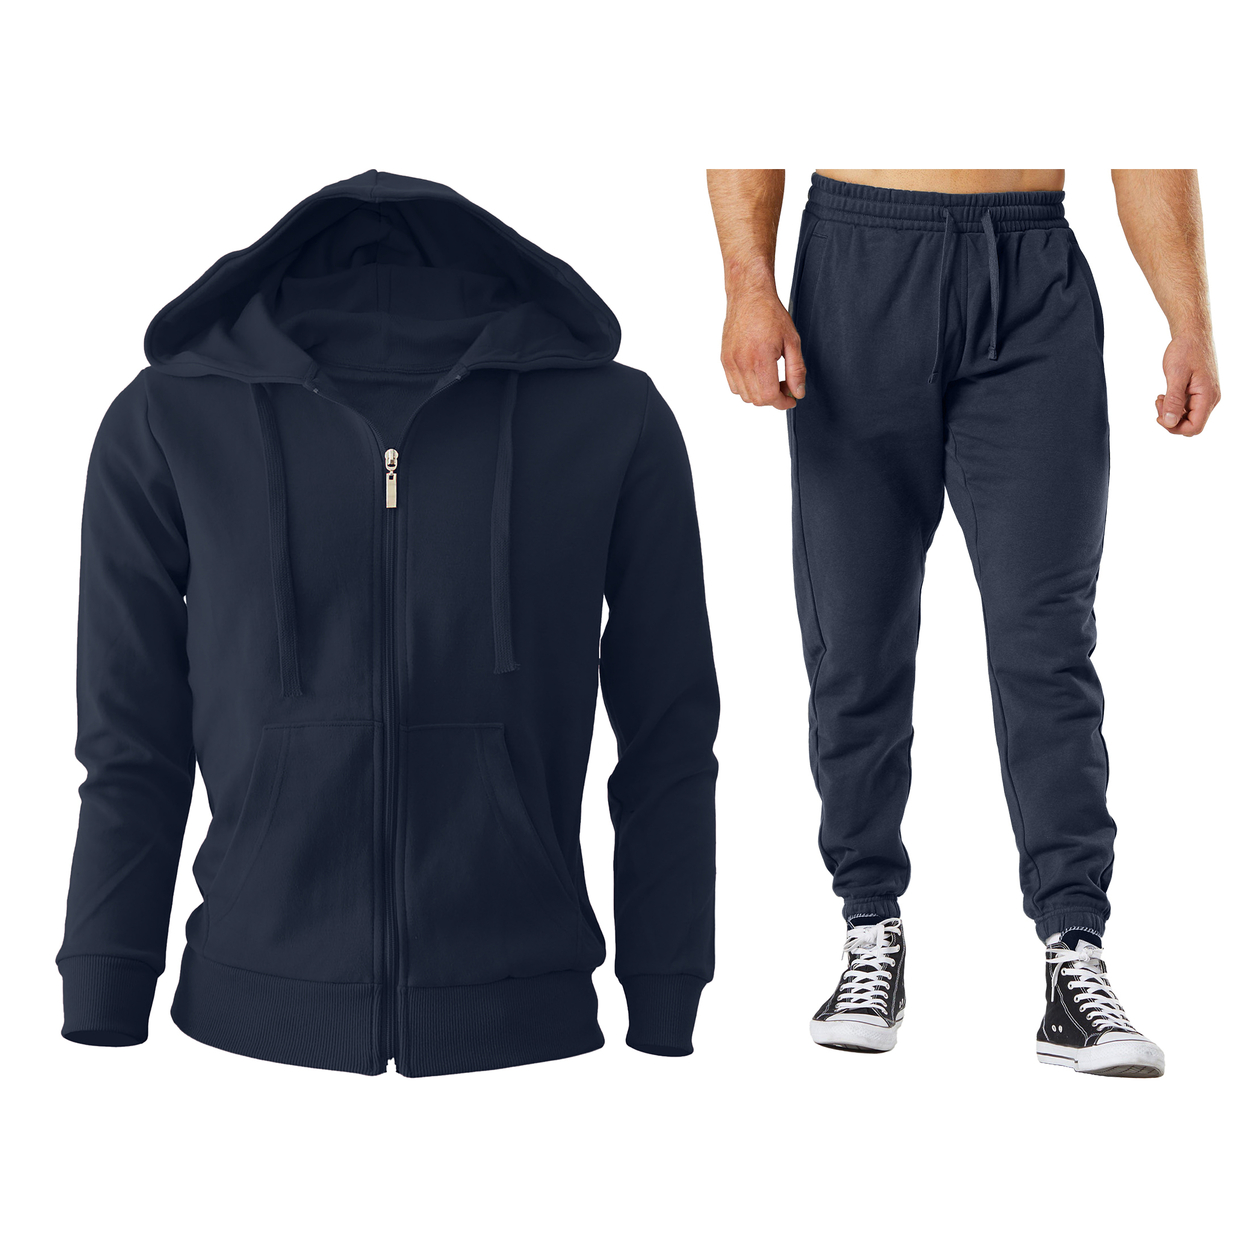 2-Piece: Men's Winter Warm Cozy Athletic Multi-Pockets BIG & TALL Sweatsuit Set - Navy, Large